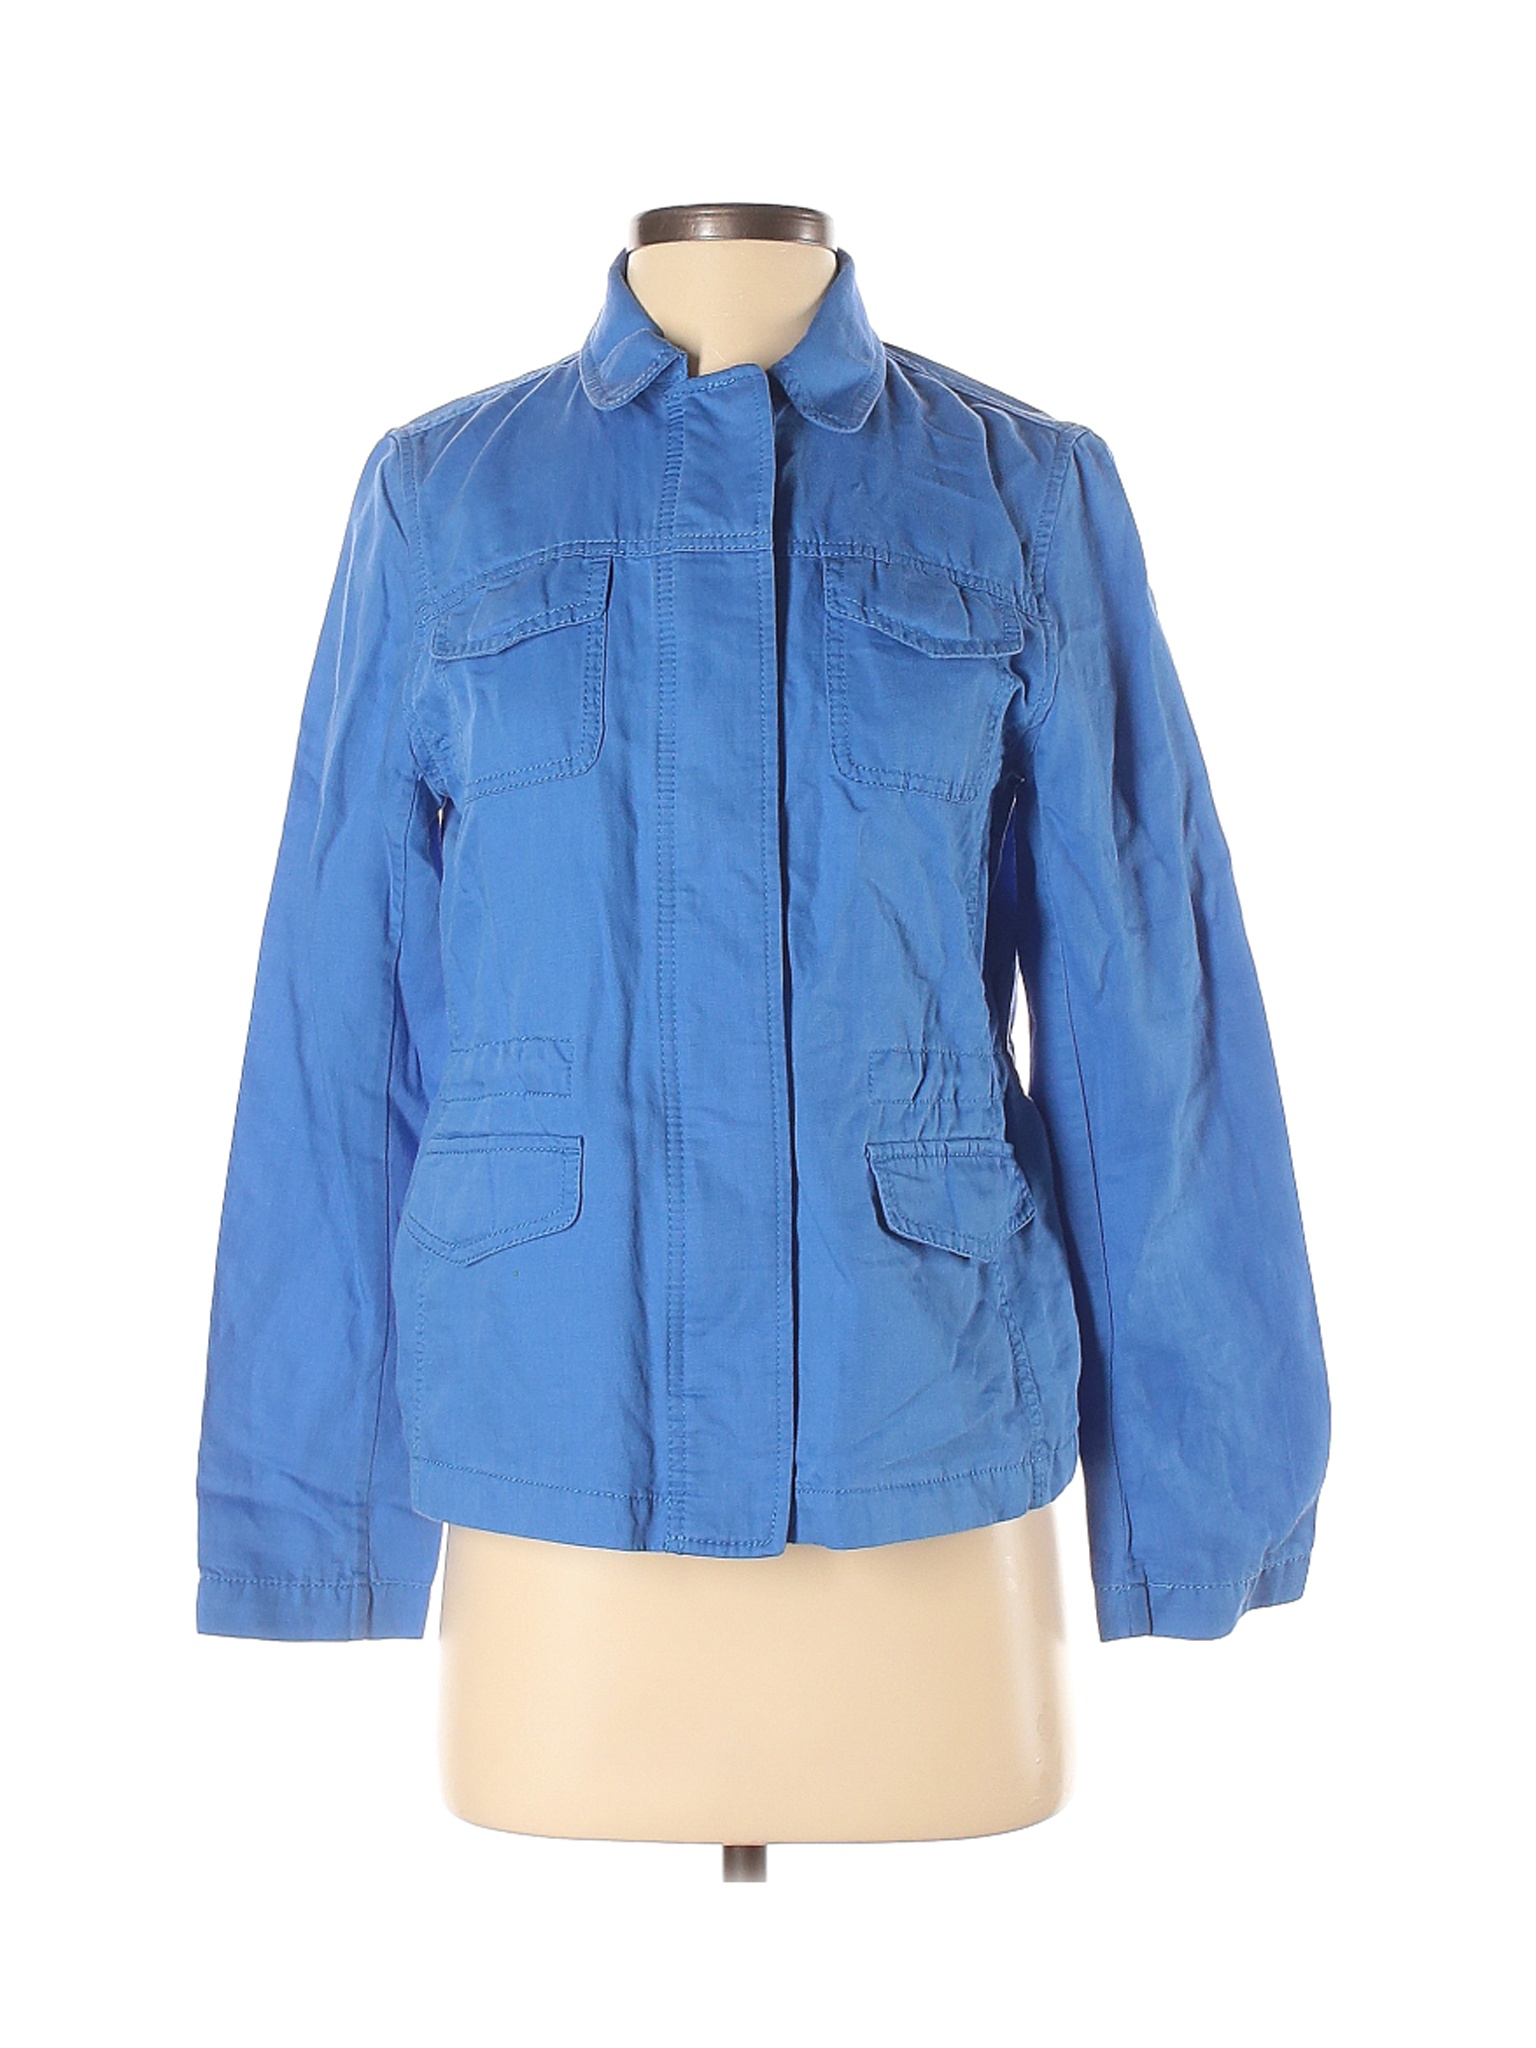 Talbots Women Blue Jacket XS | eBay